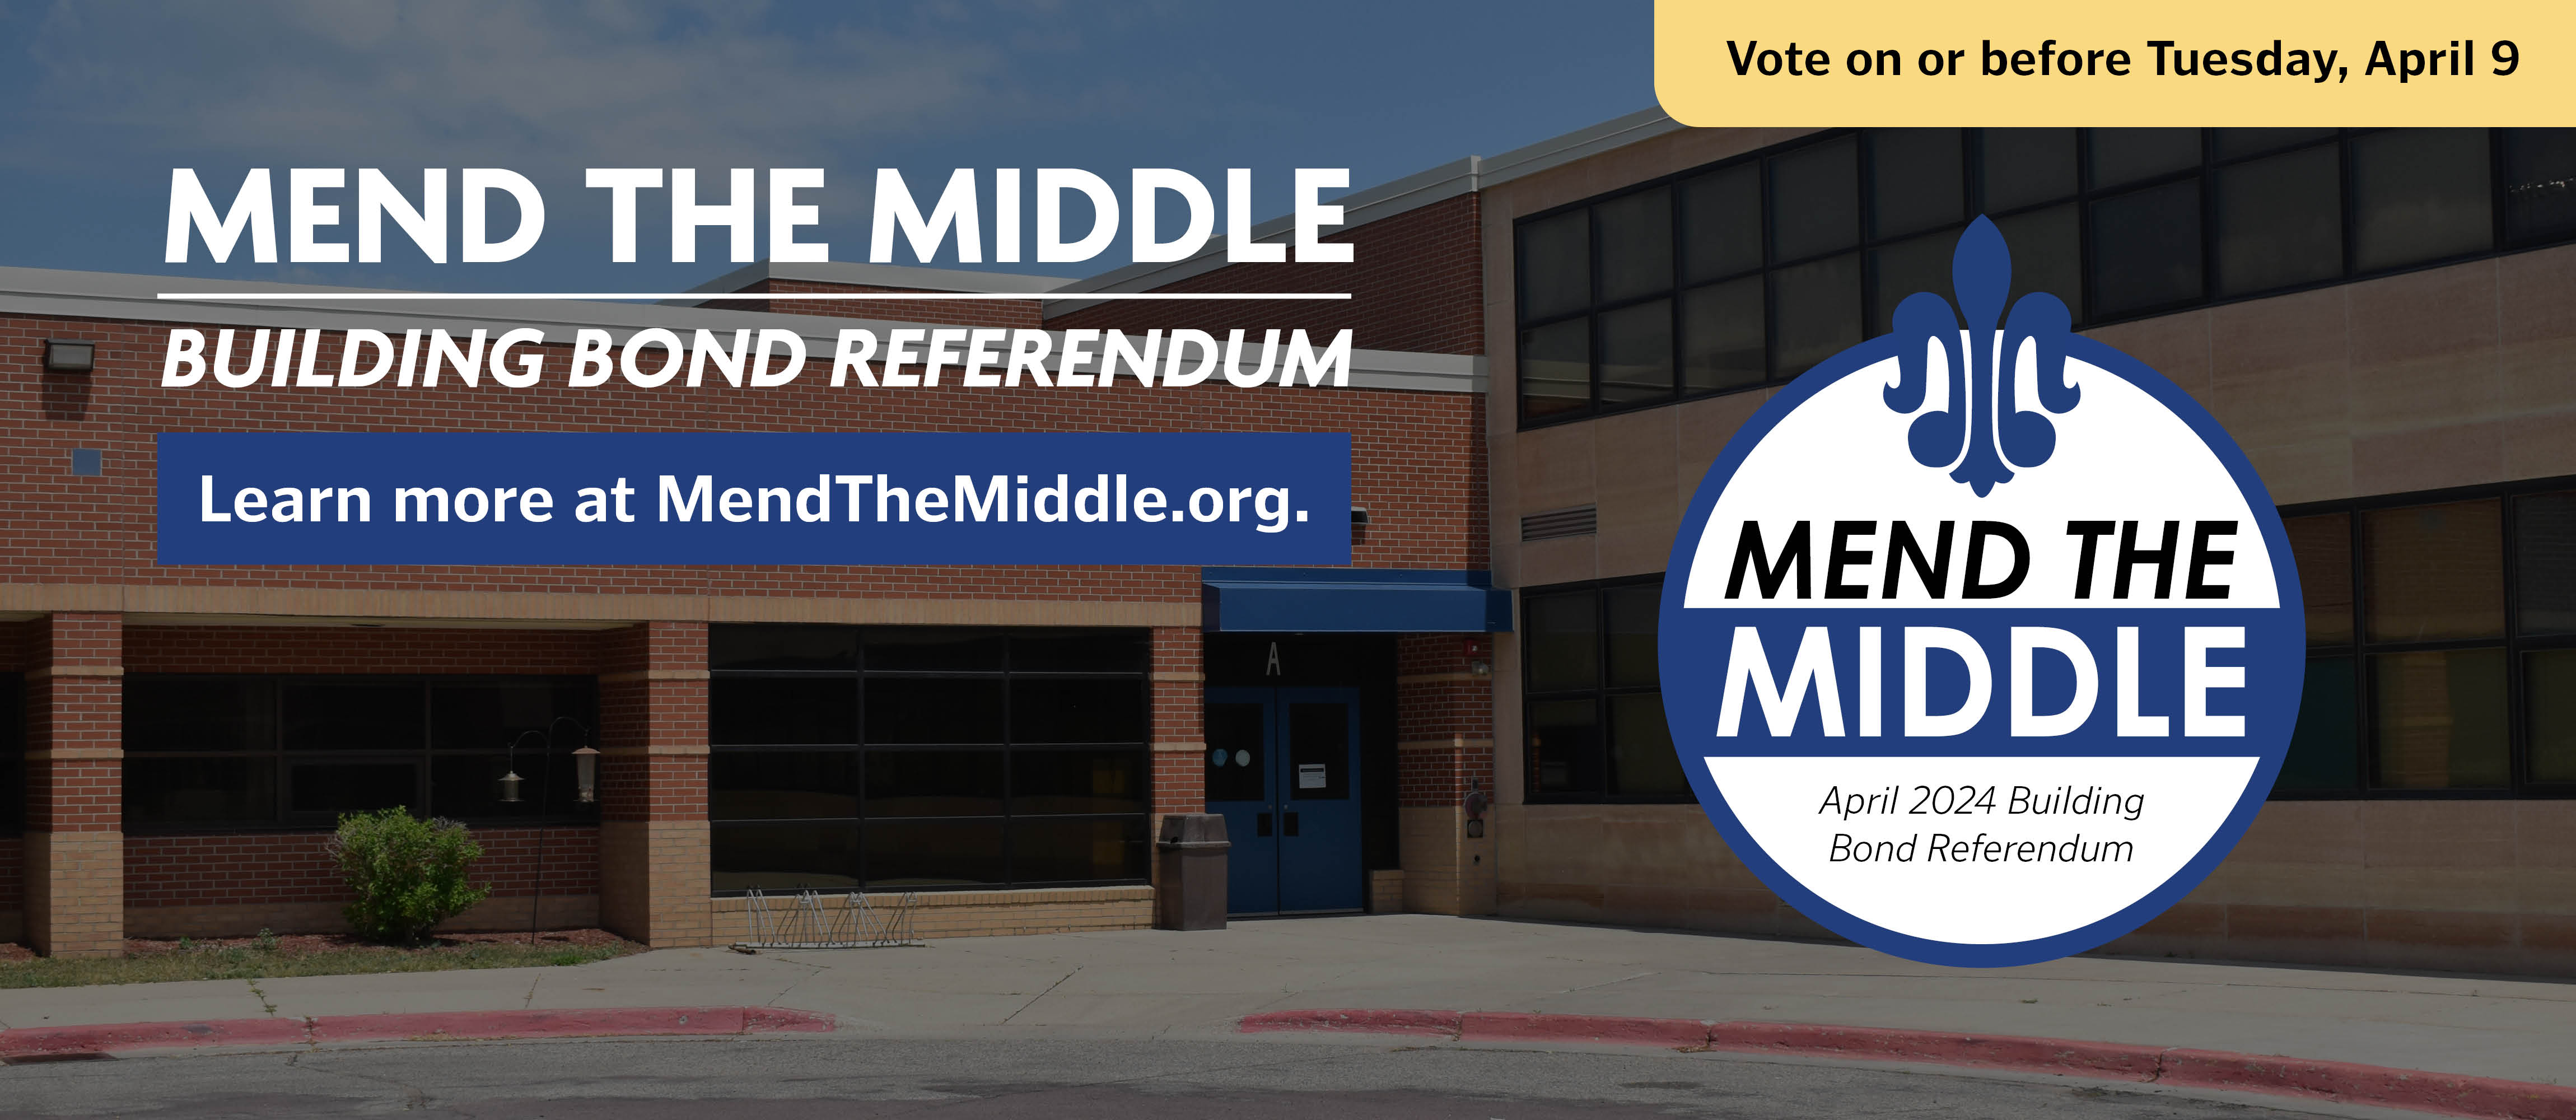 Mend the Middle:  MS Bond Referendum